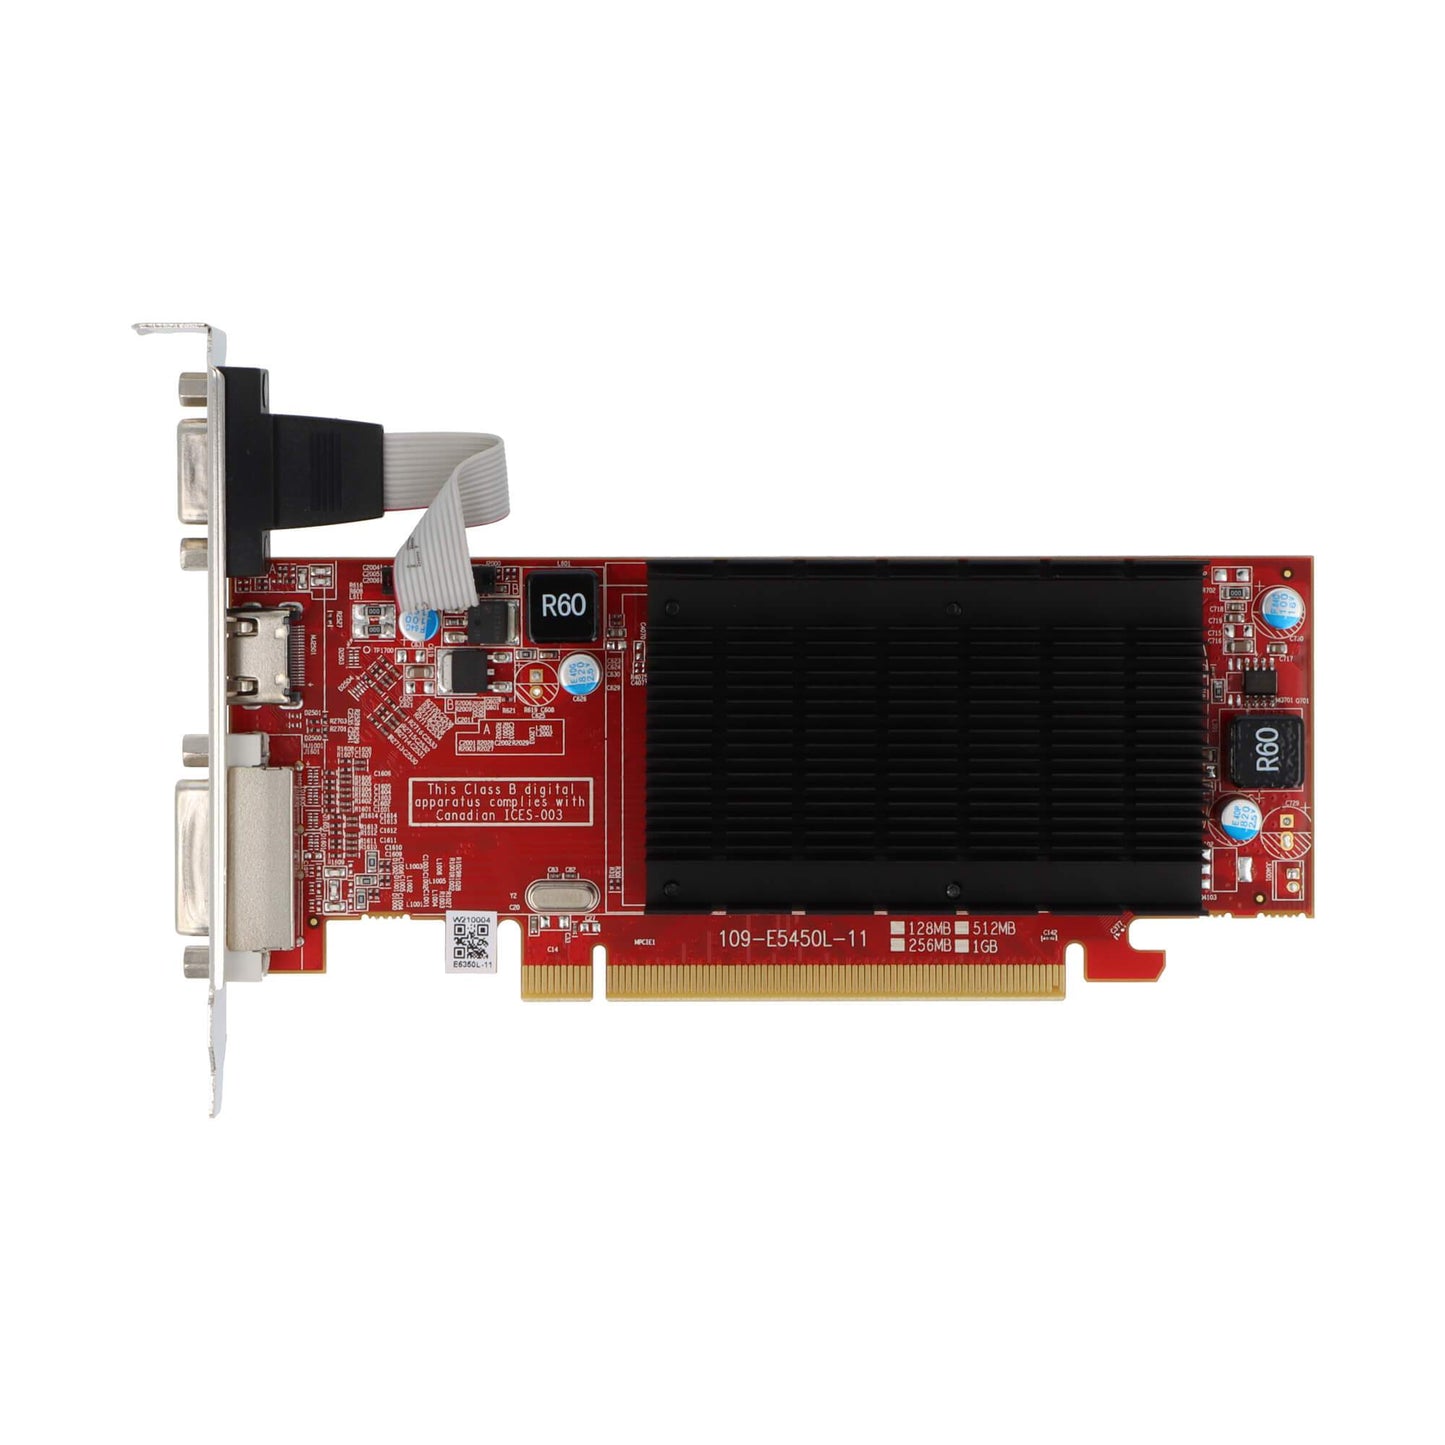 Radeon HD 5450 1GB GDDR3 2M (DVI-I, HDMI, VGA)